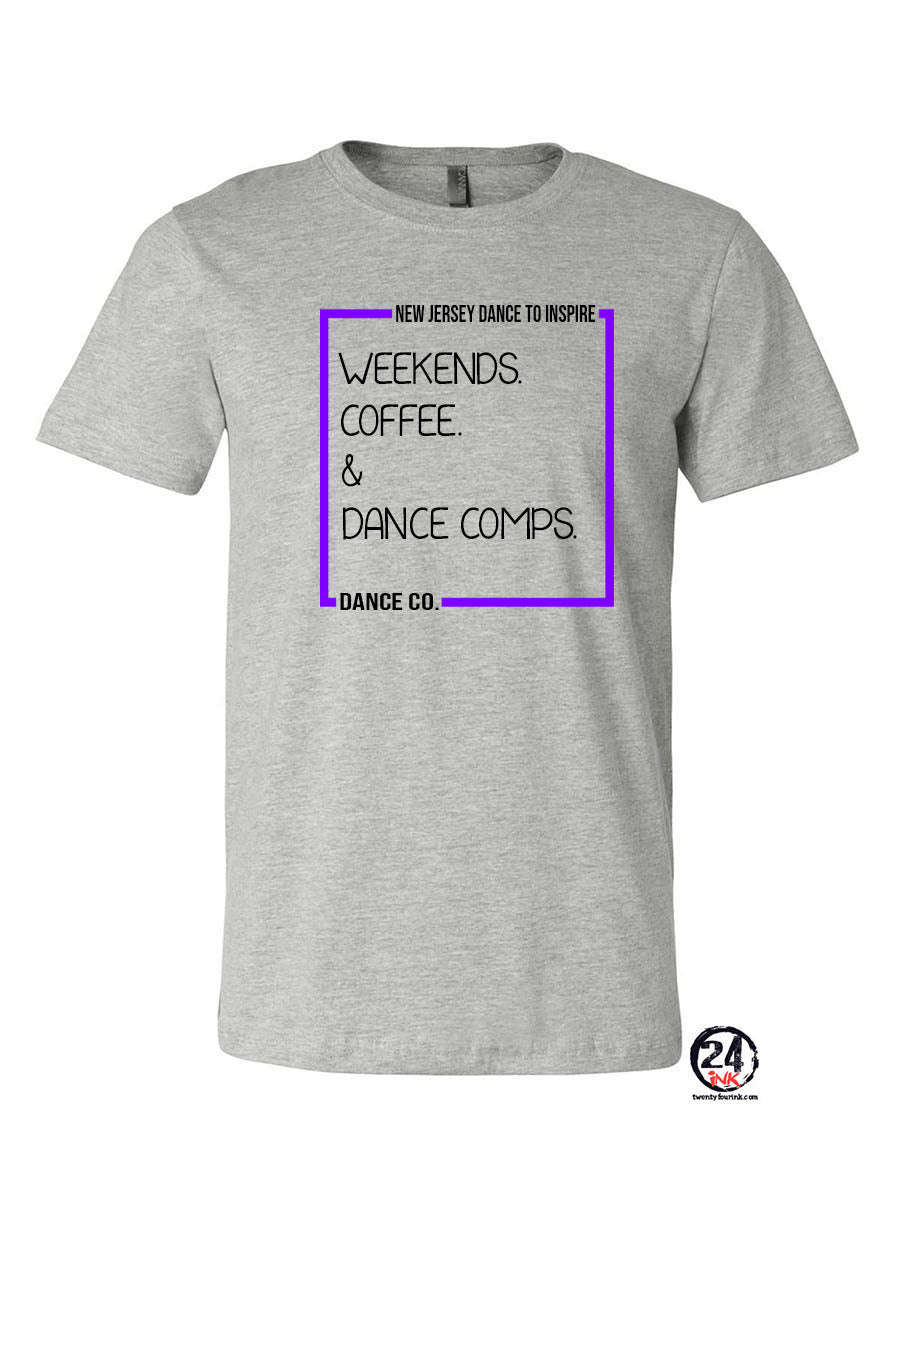 NJ Dance design 17 T-Shirt